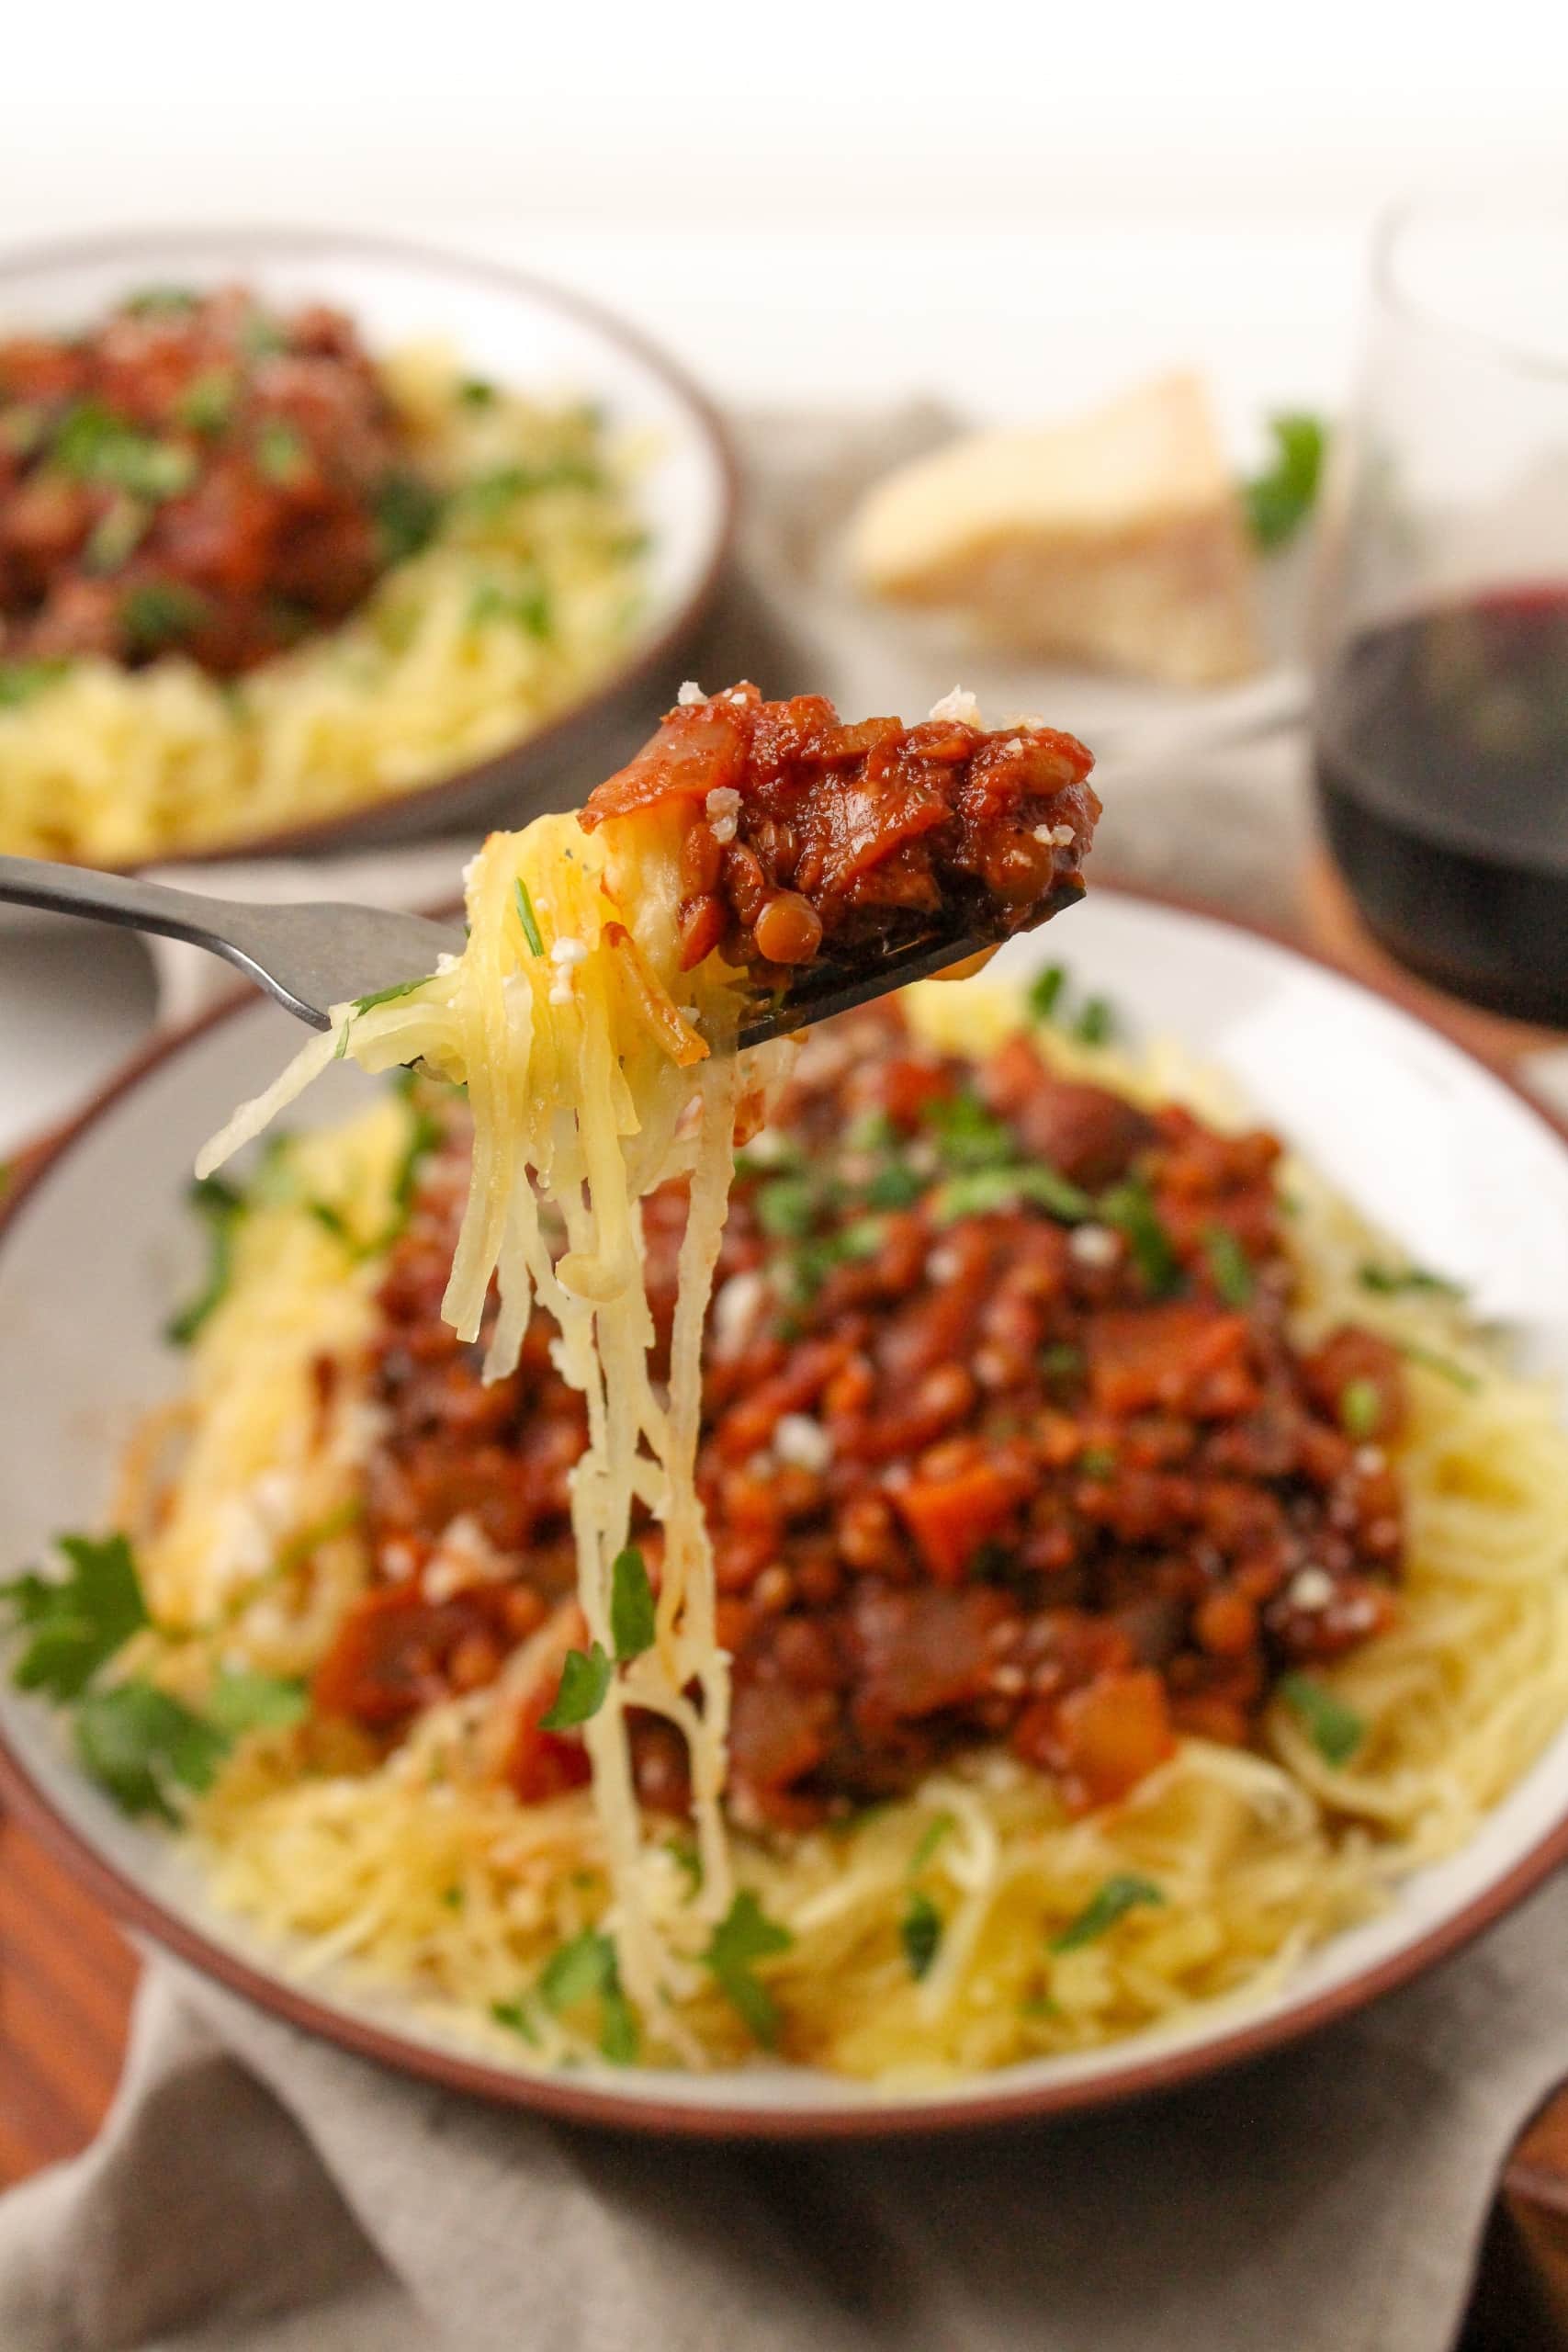 https://www.fannetasticfood.com/wp-content/uploads/2019/02/instant-pot-spaghetti-squash-lentil-bolognese4-scaled.jpg